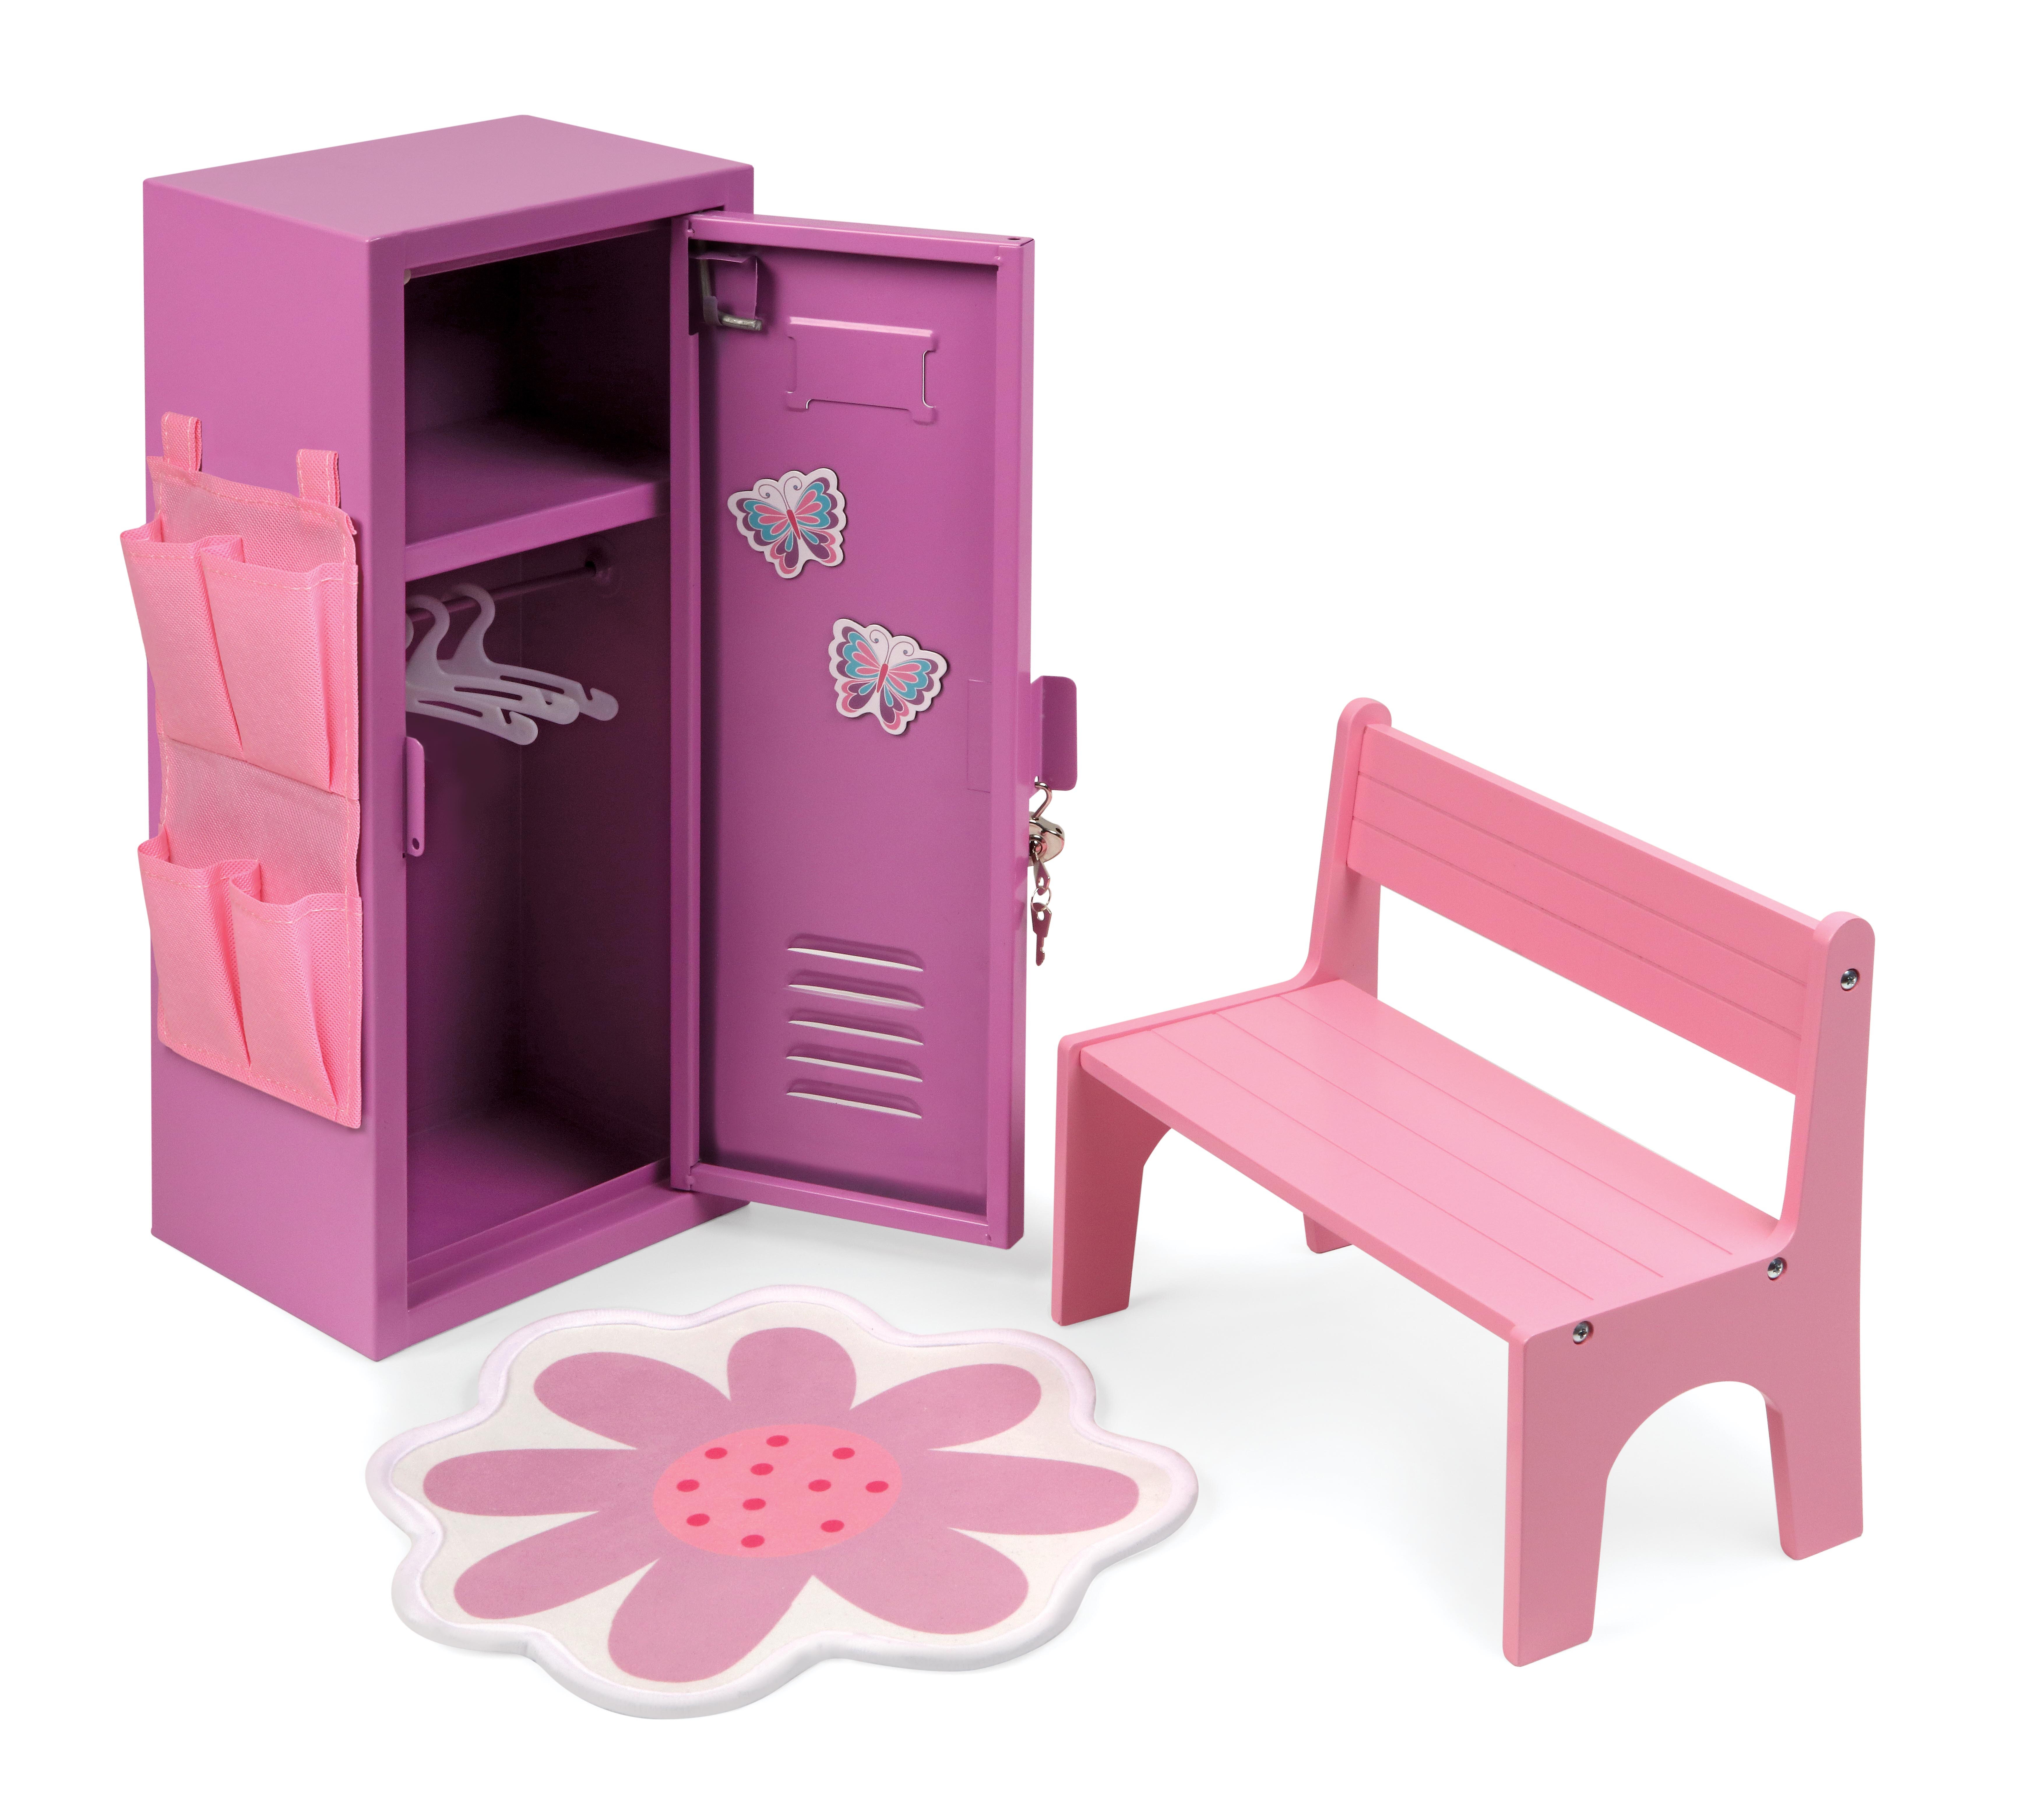 Barbie® Design Activity Locker at Menards®